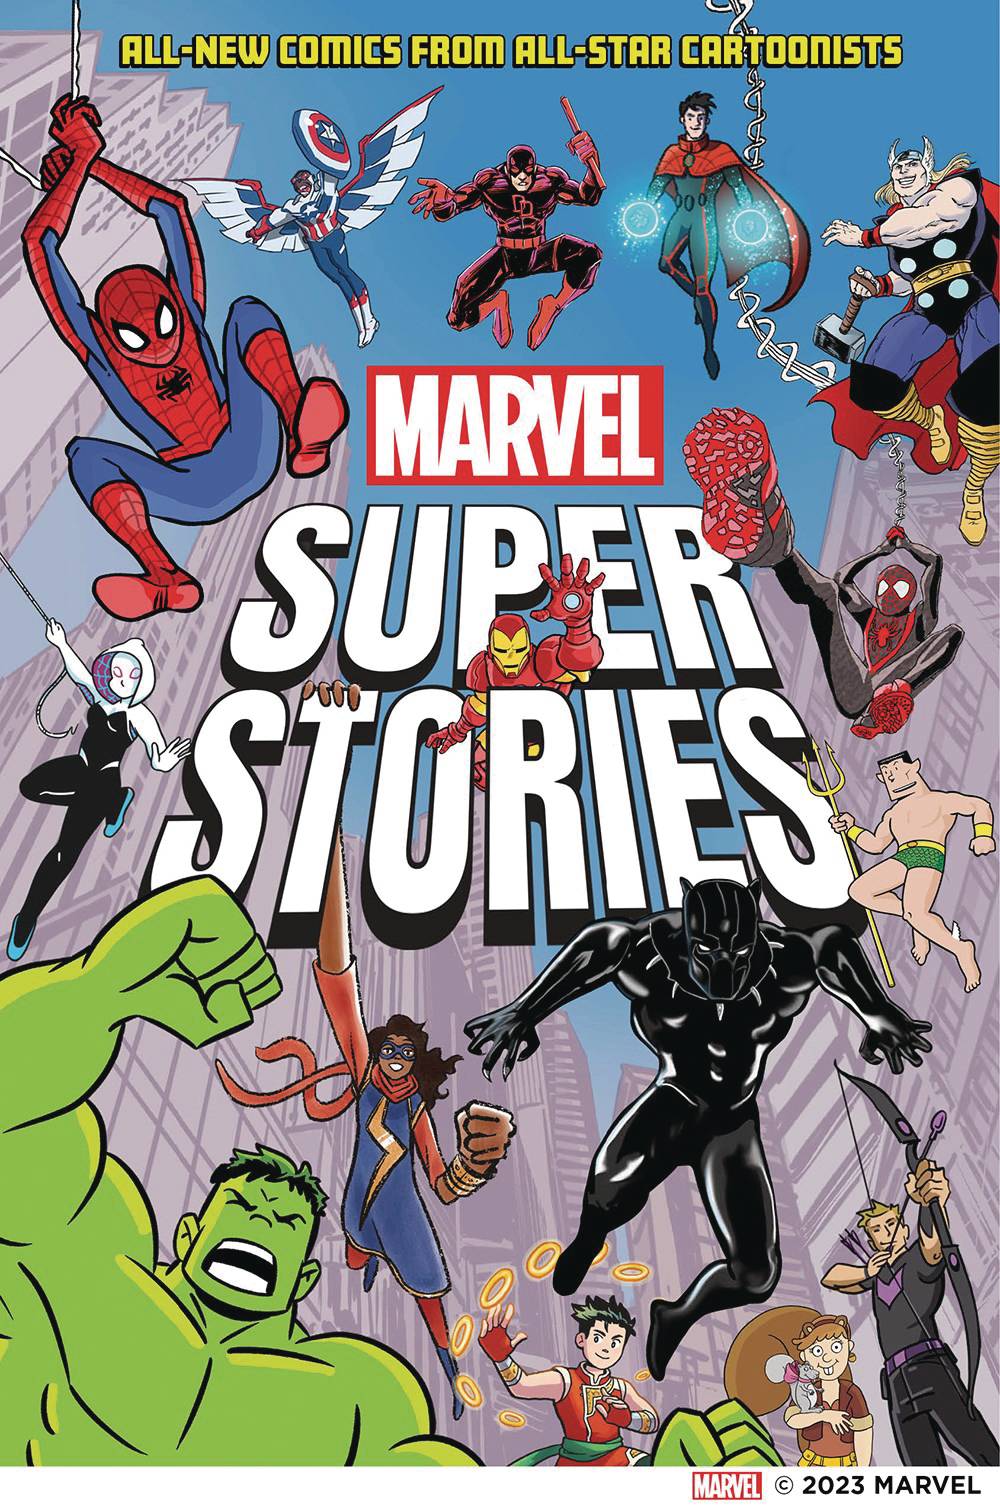 MARVEL SUPER STORIES HC NEW COMICS ALL STAR CARTOONISTS